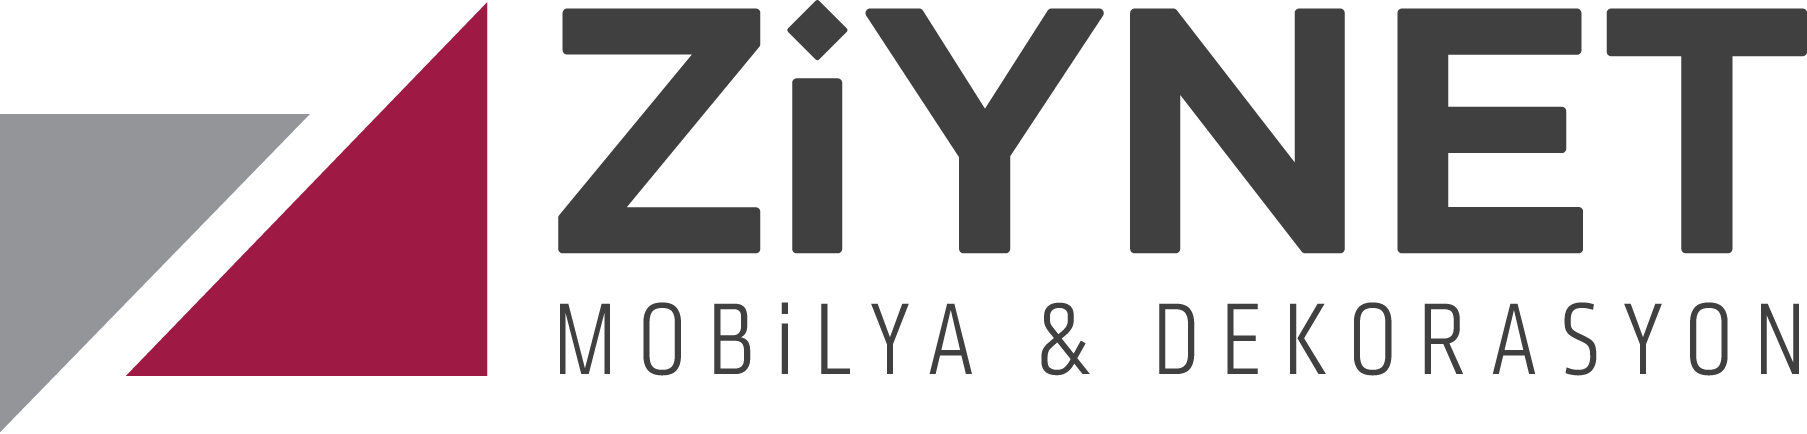 Ziynet Mobilya - Home